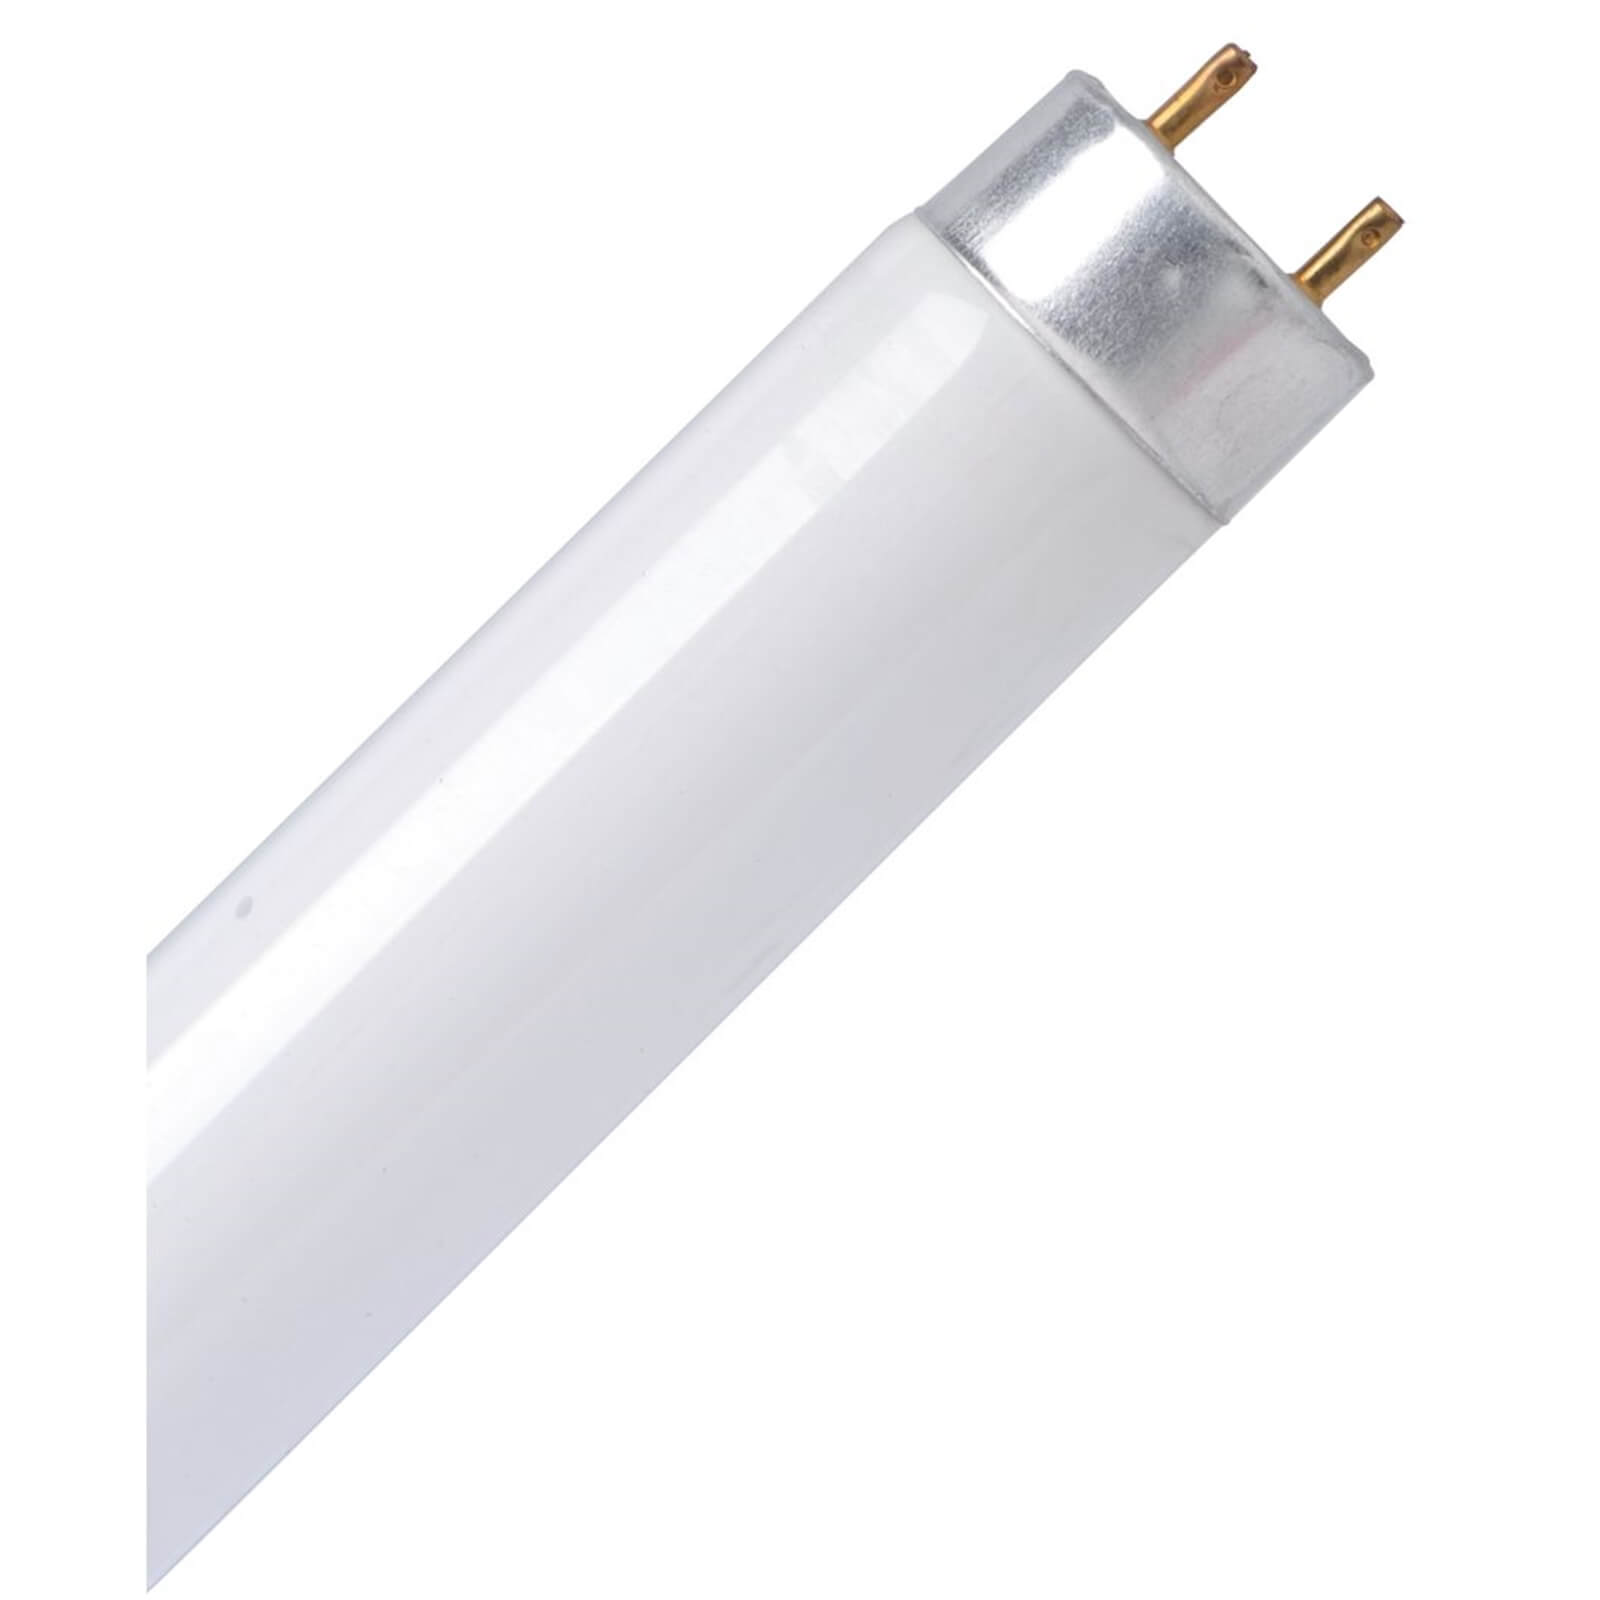 Energy Saver (CFL) Tube 0.3 8W Light Bulb